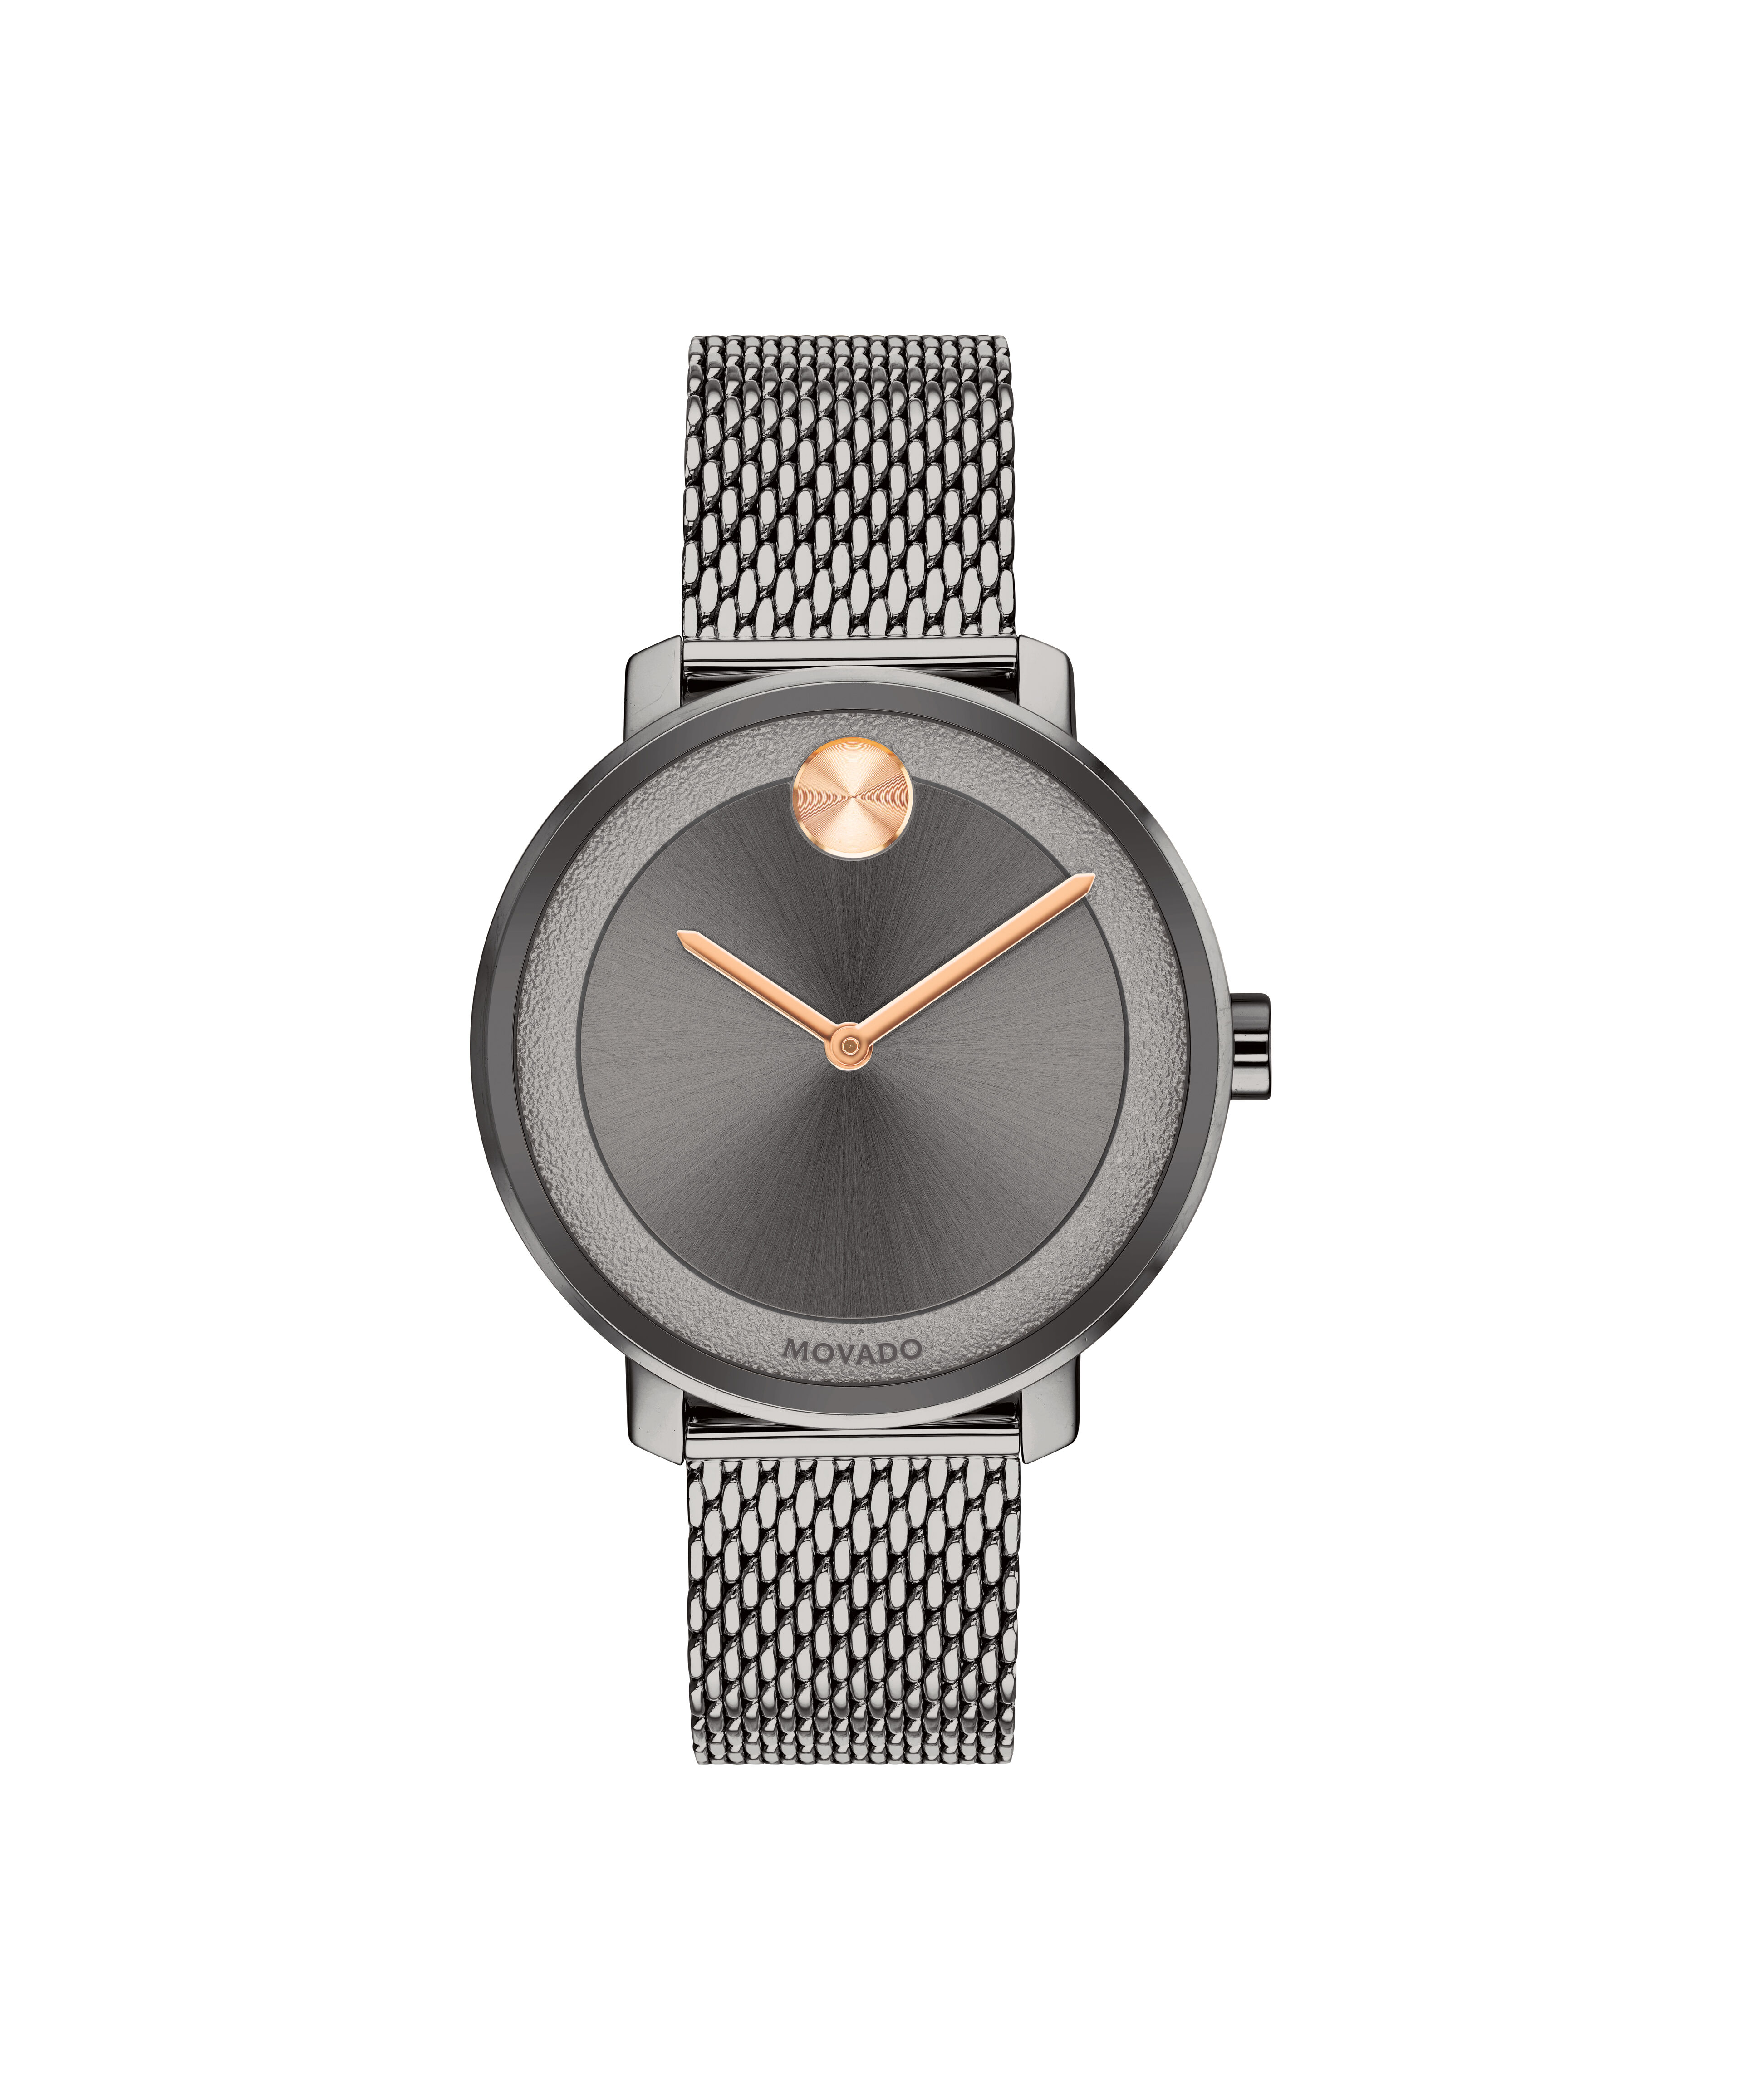 Replica Breitling Watches Usa